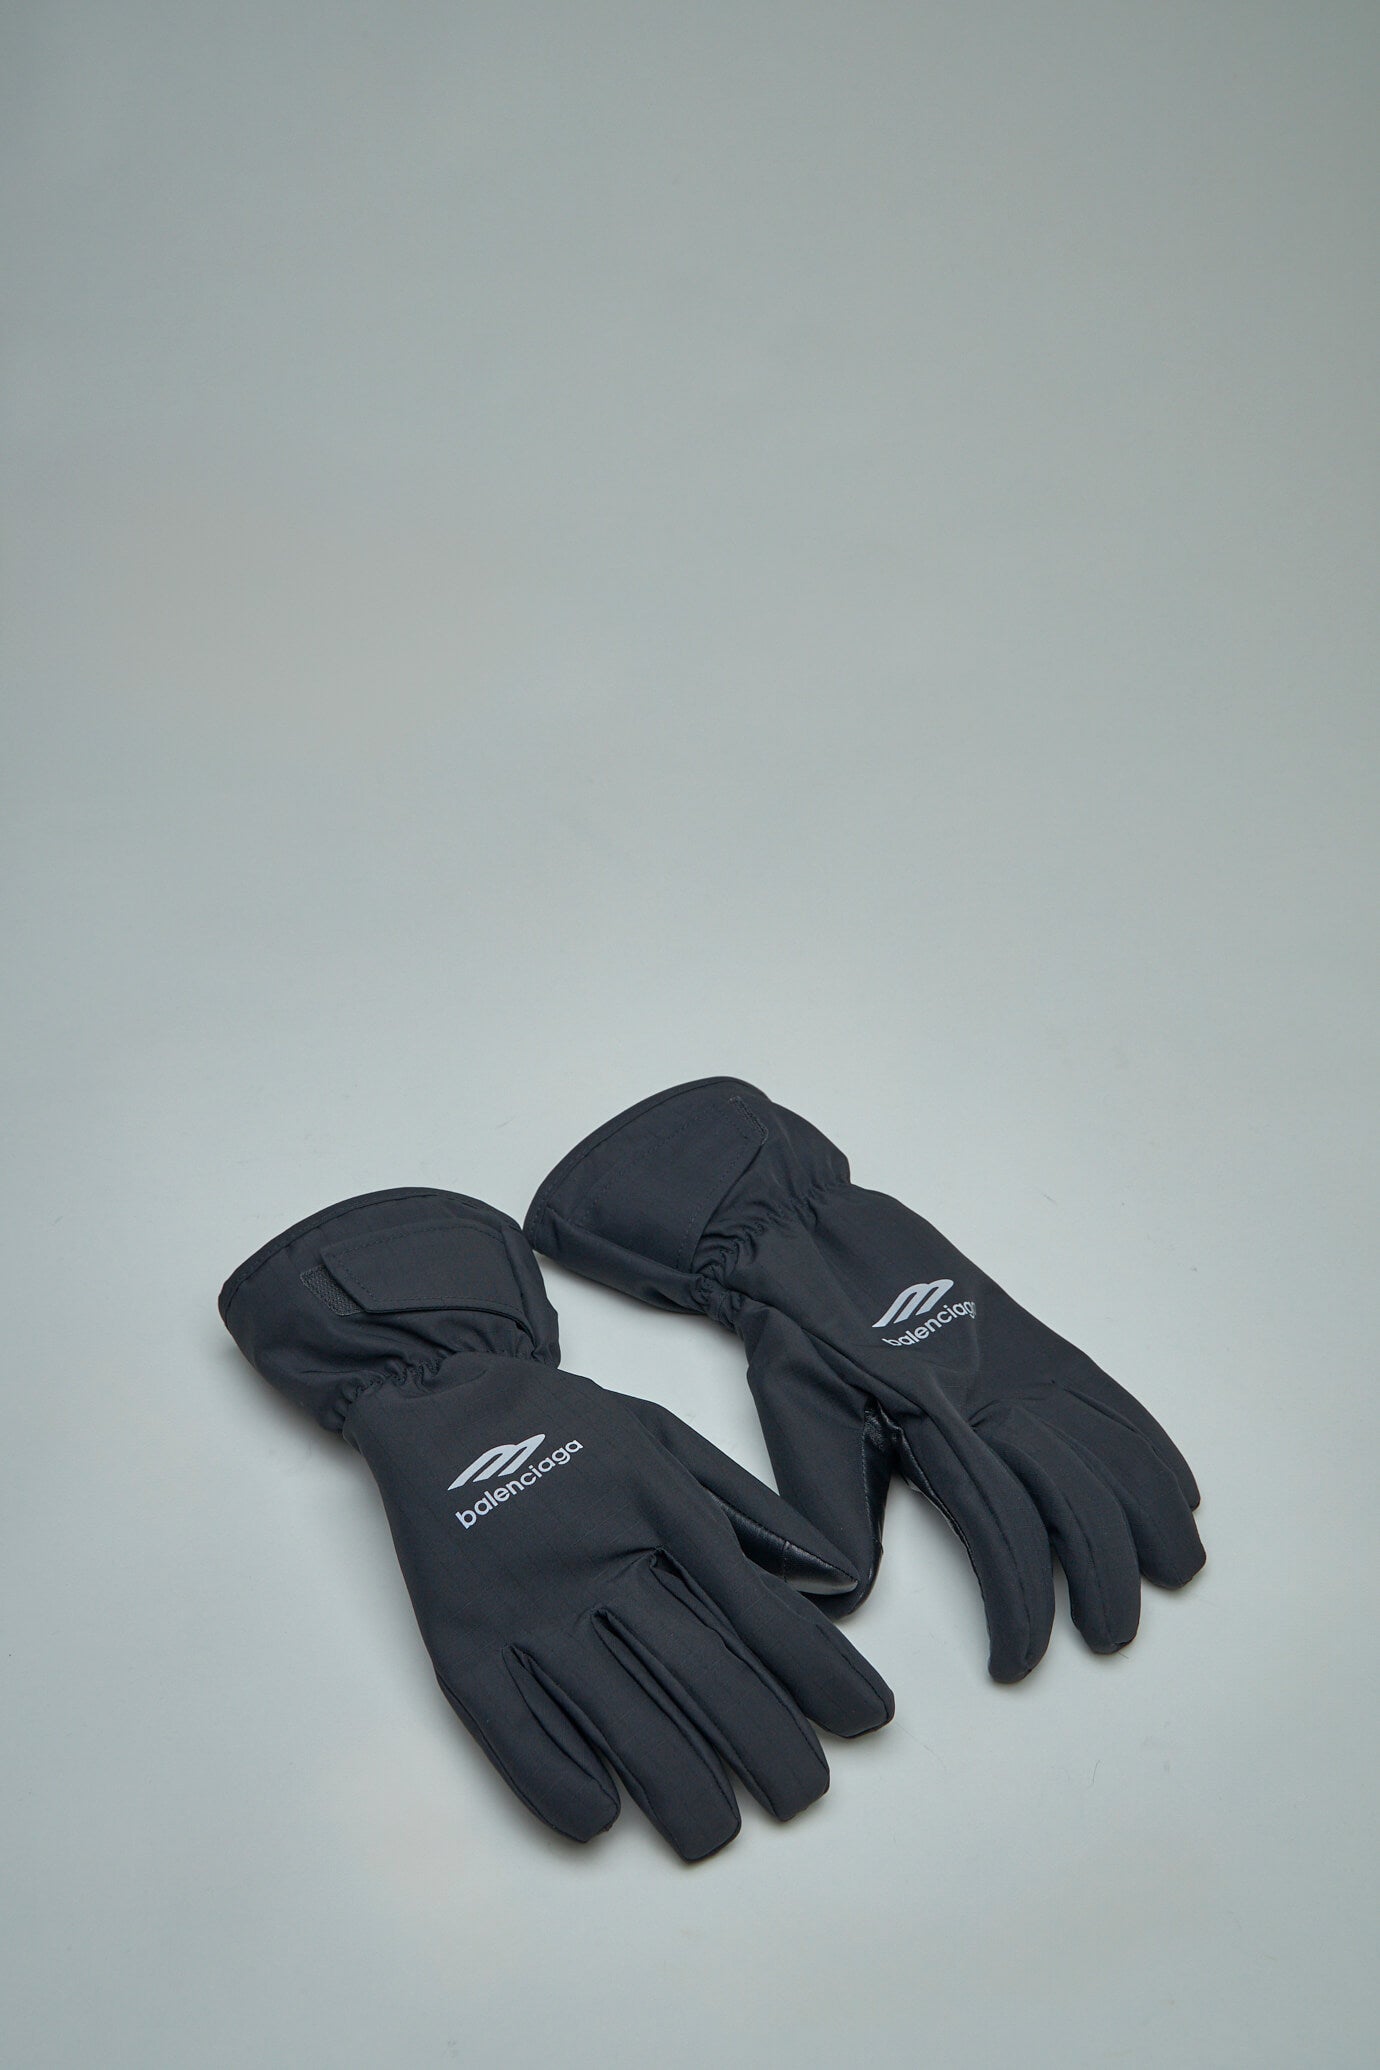 GL Ski Gloves